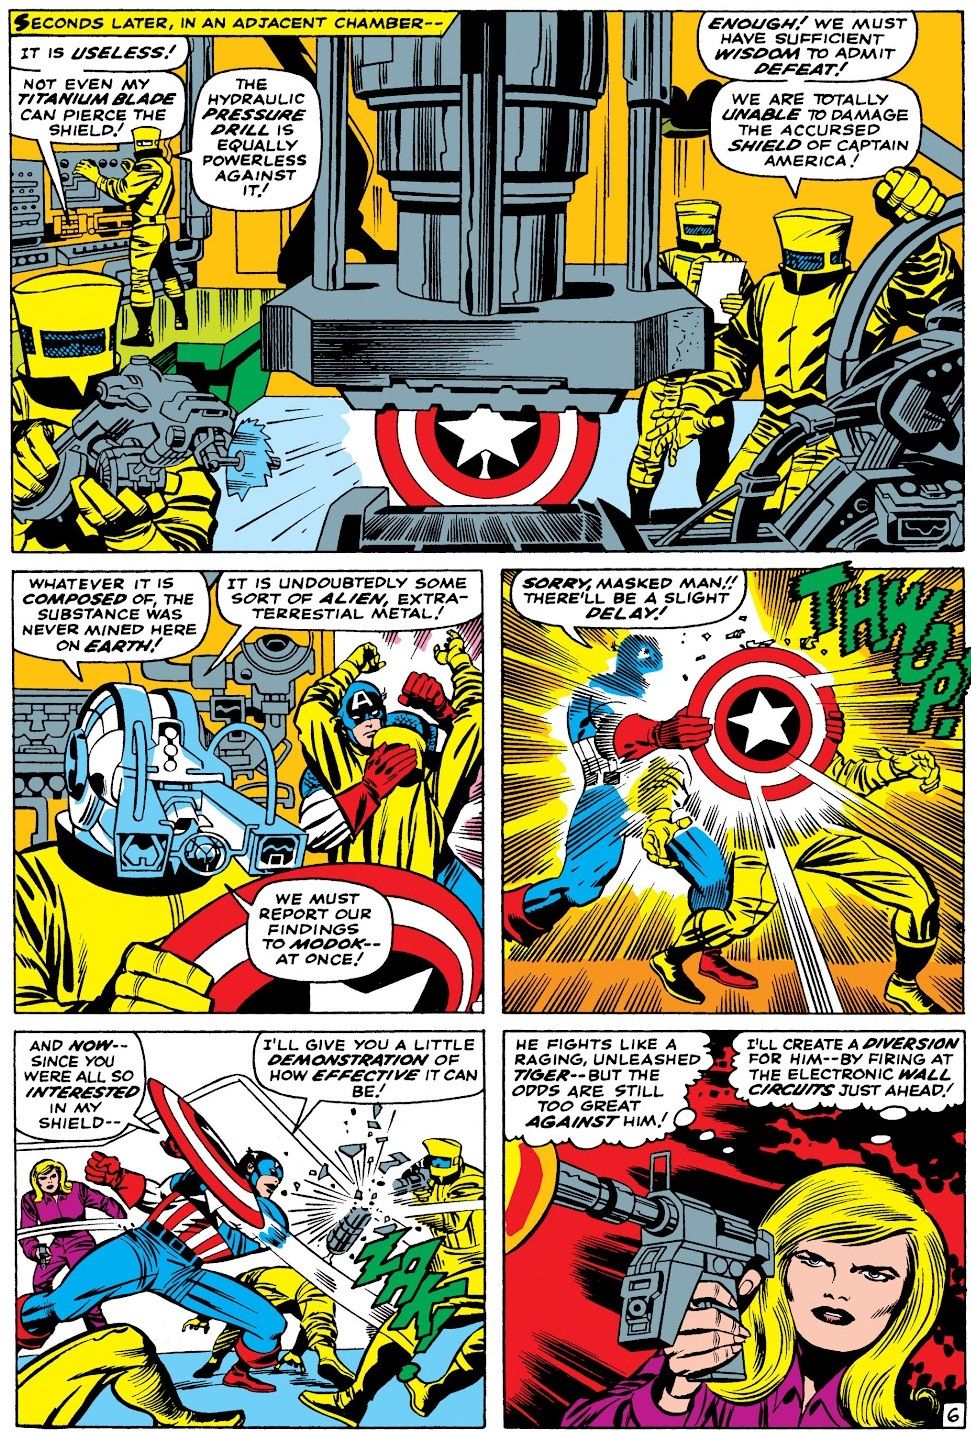 Did Iron Man Really Secretly Borrow Captain America's Shield for Years?